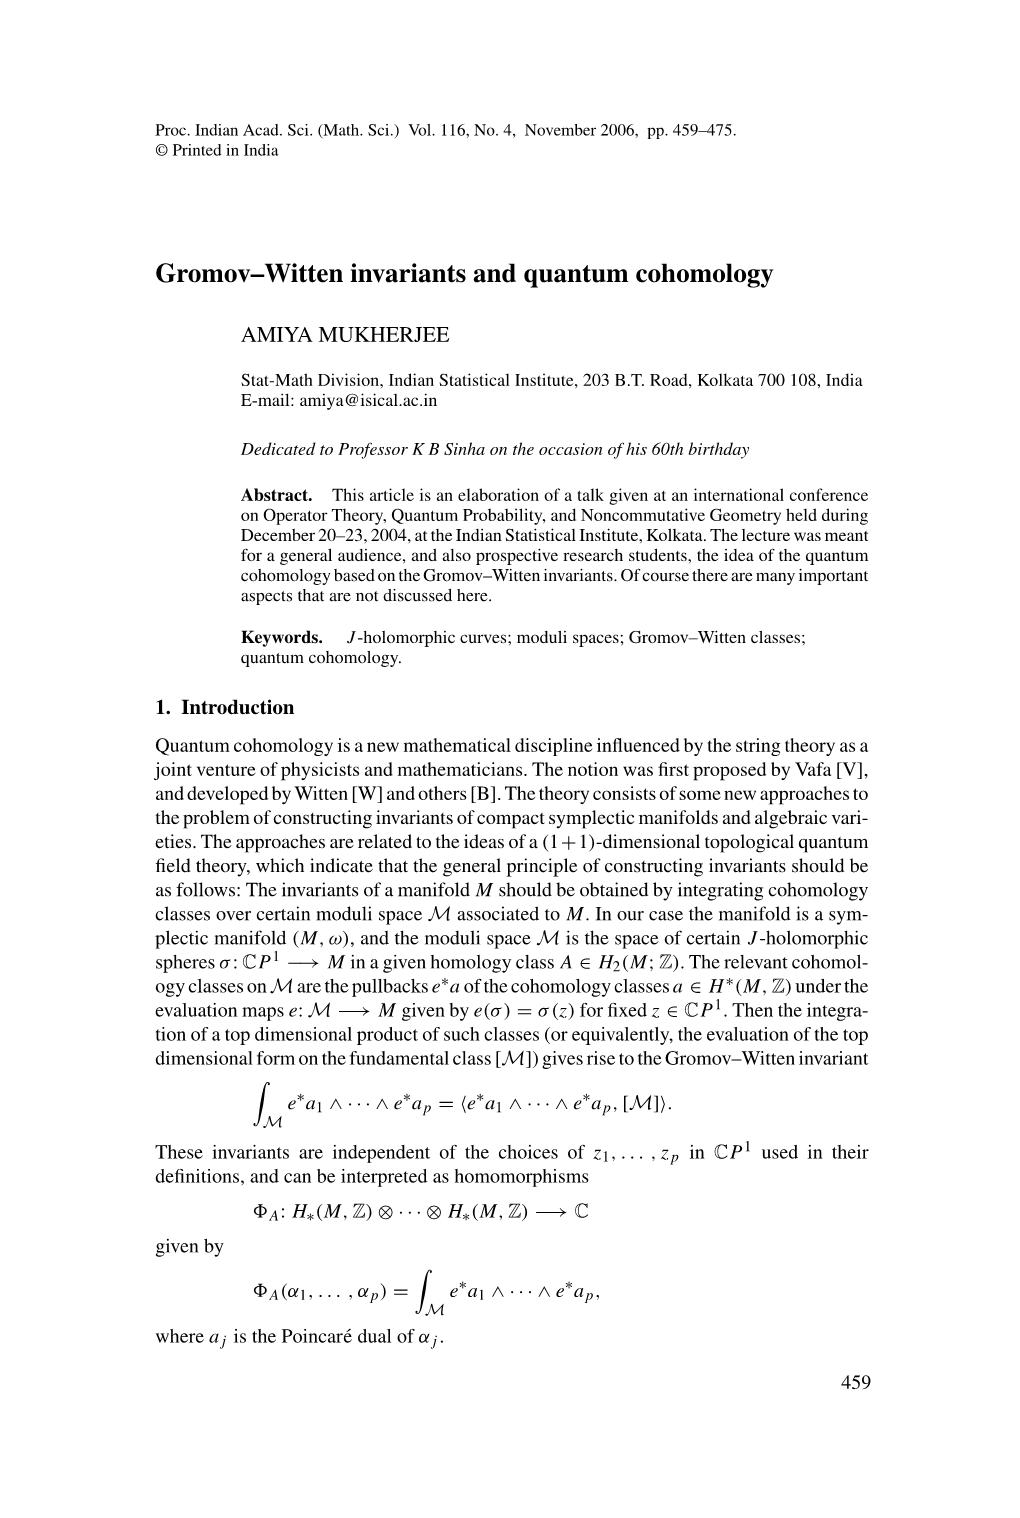 Gromov-Witten Invariants and Quantum Cohomology